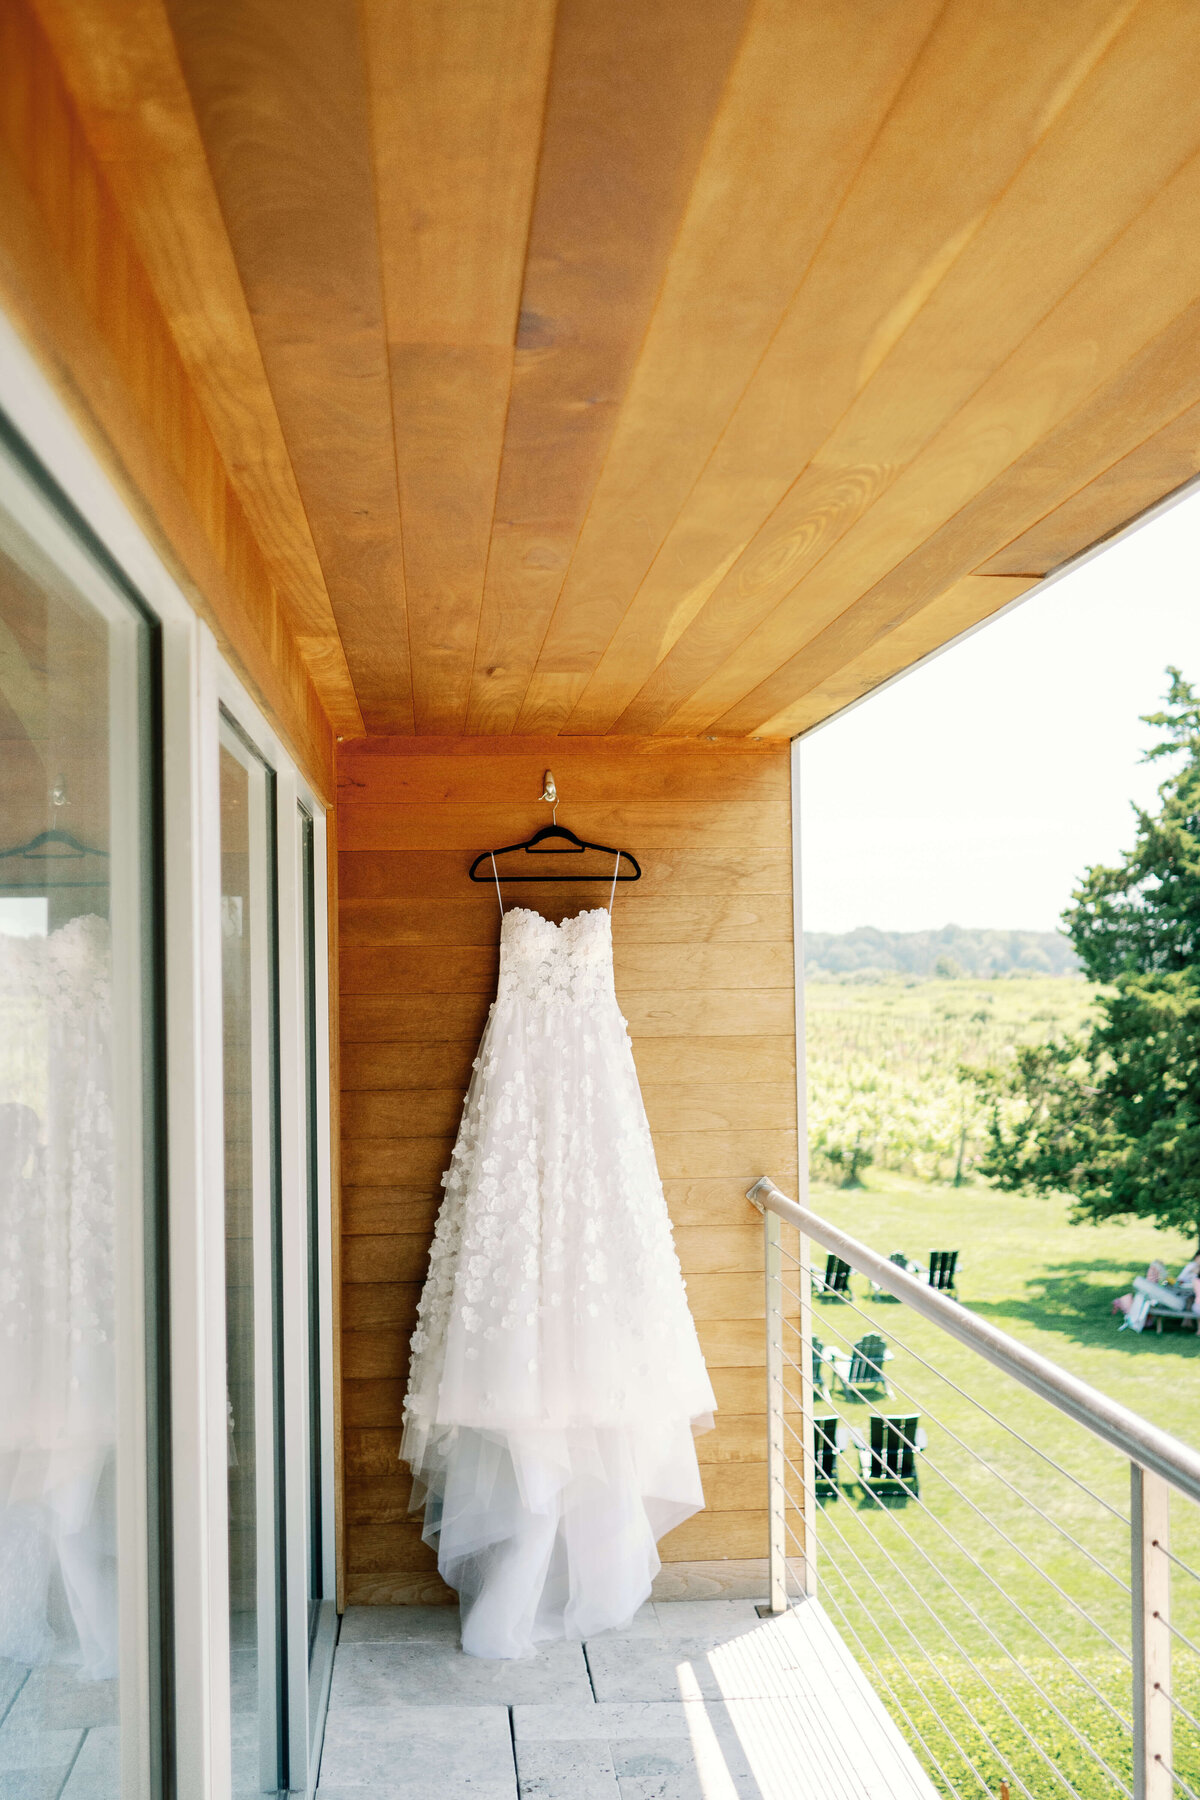 Wedding dress hanging outside